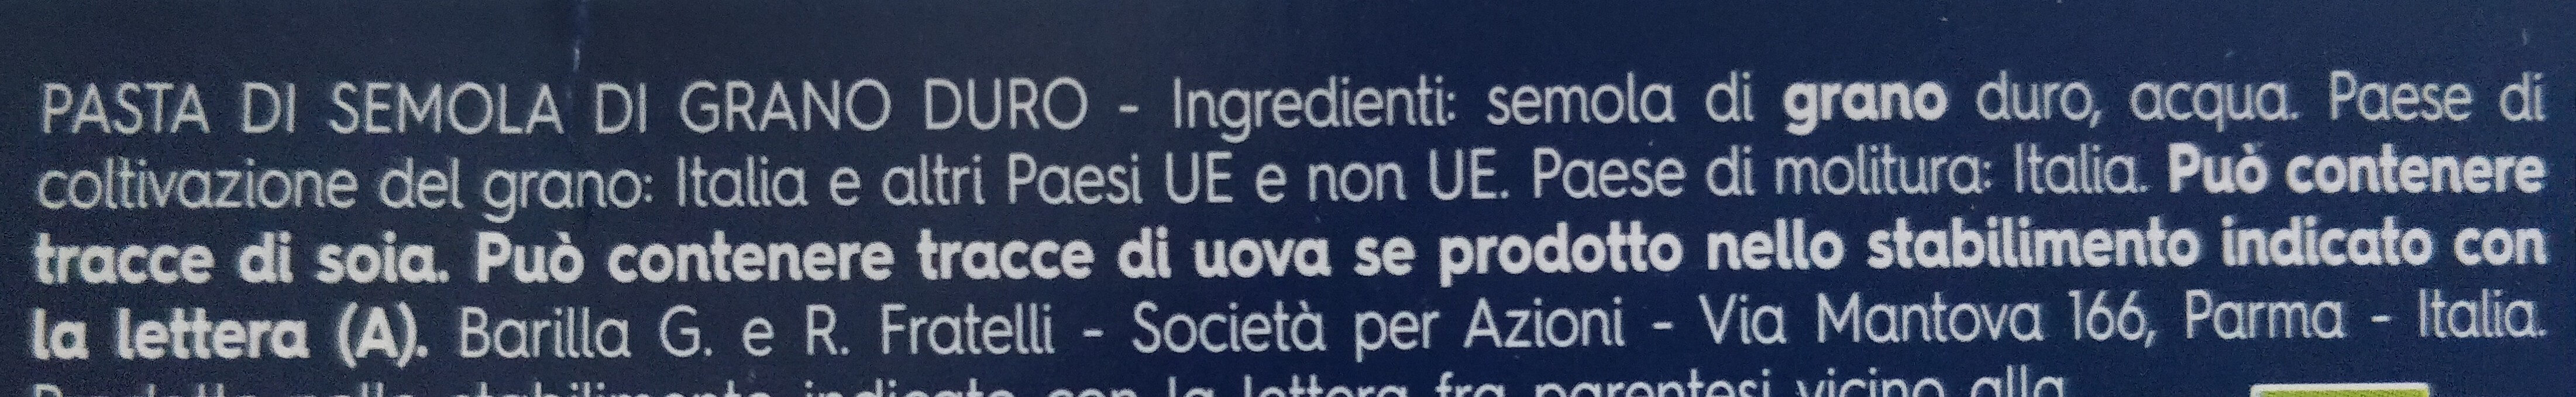 spaghetti capellini n. 1 - Ingredients - en